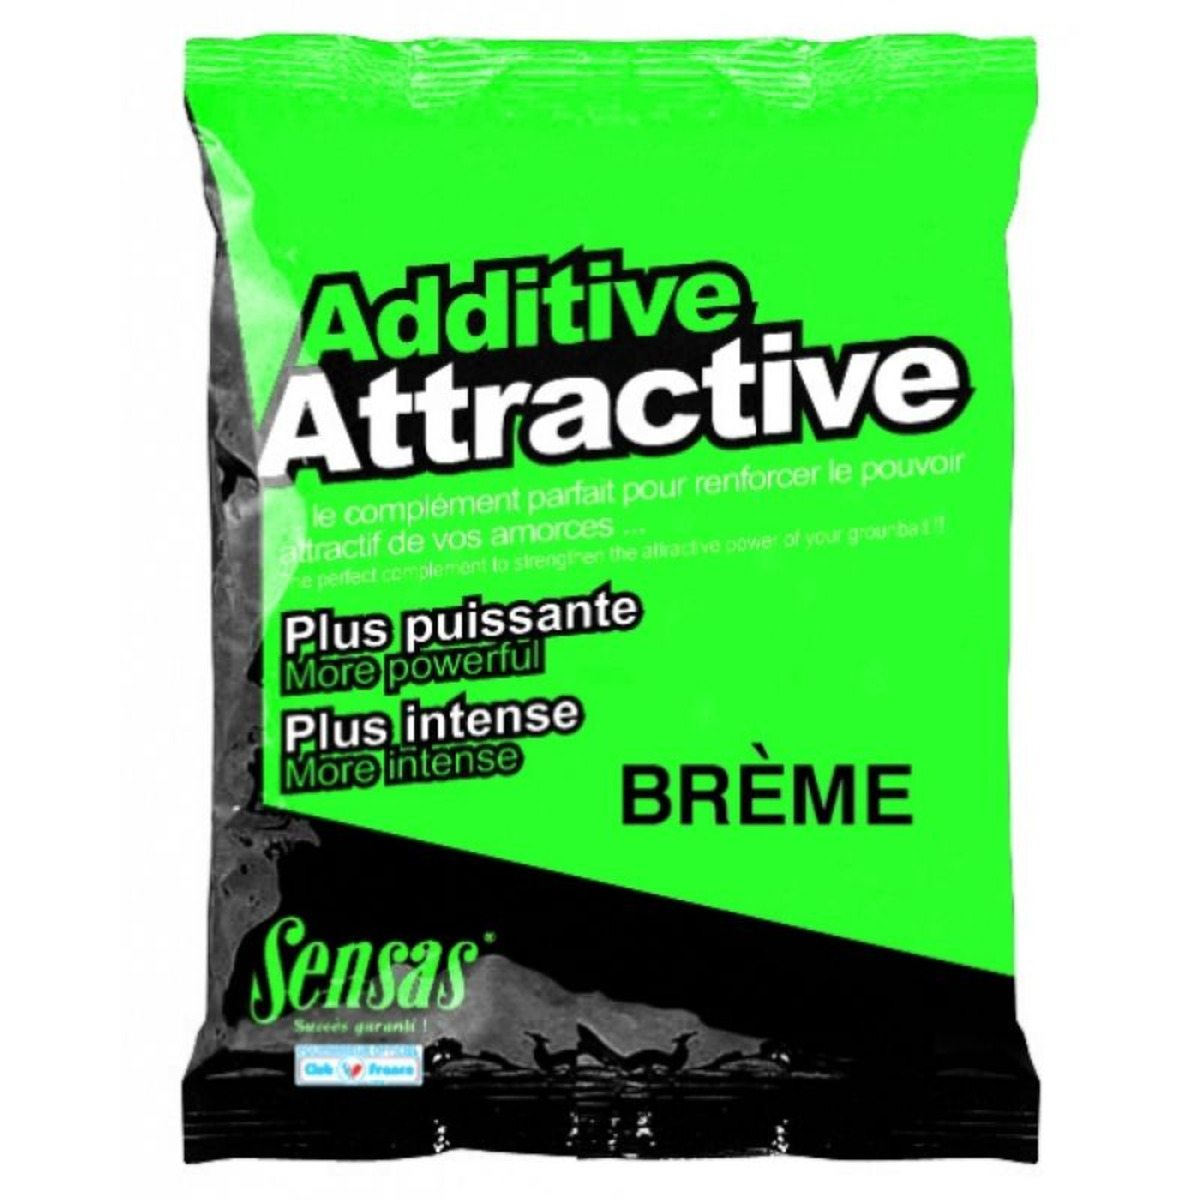 Sensas Aditivo Attractive - Breme - 250 g